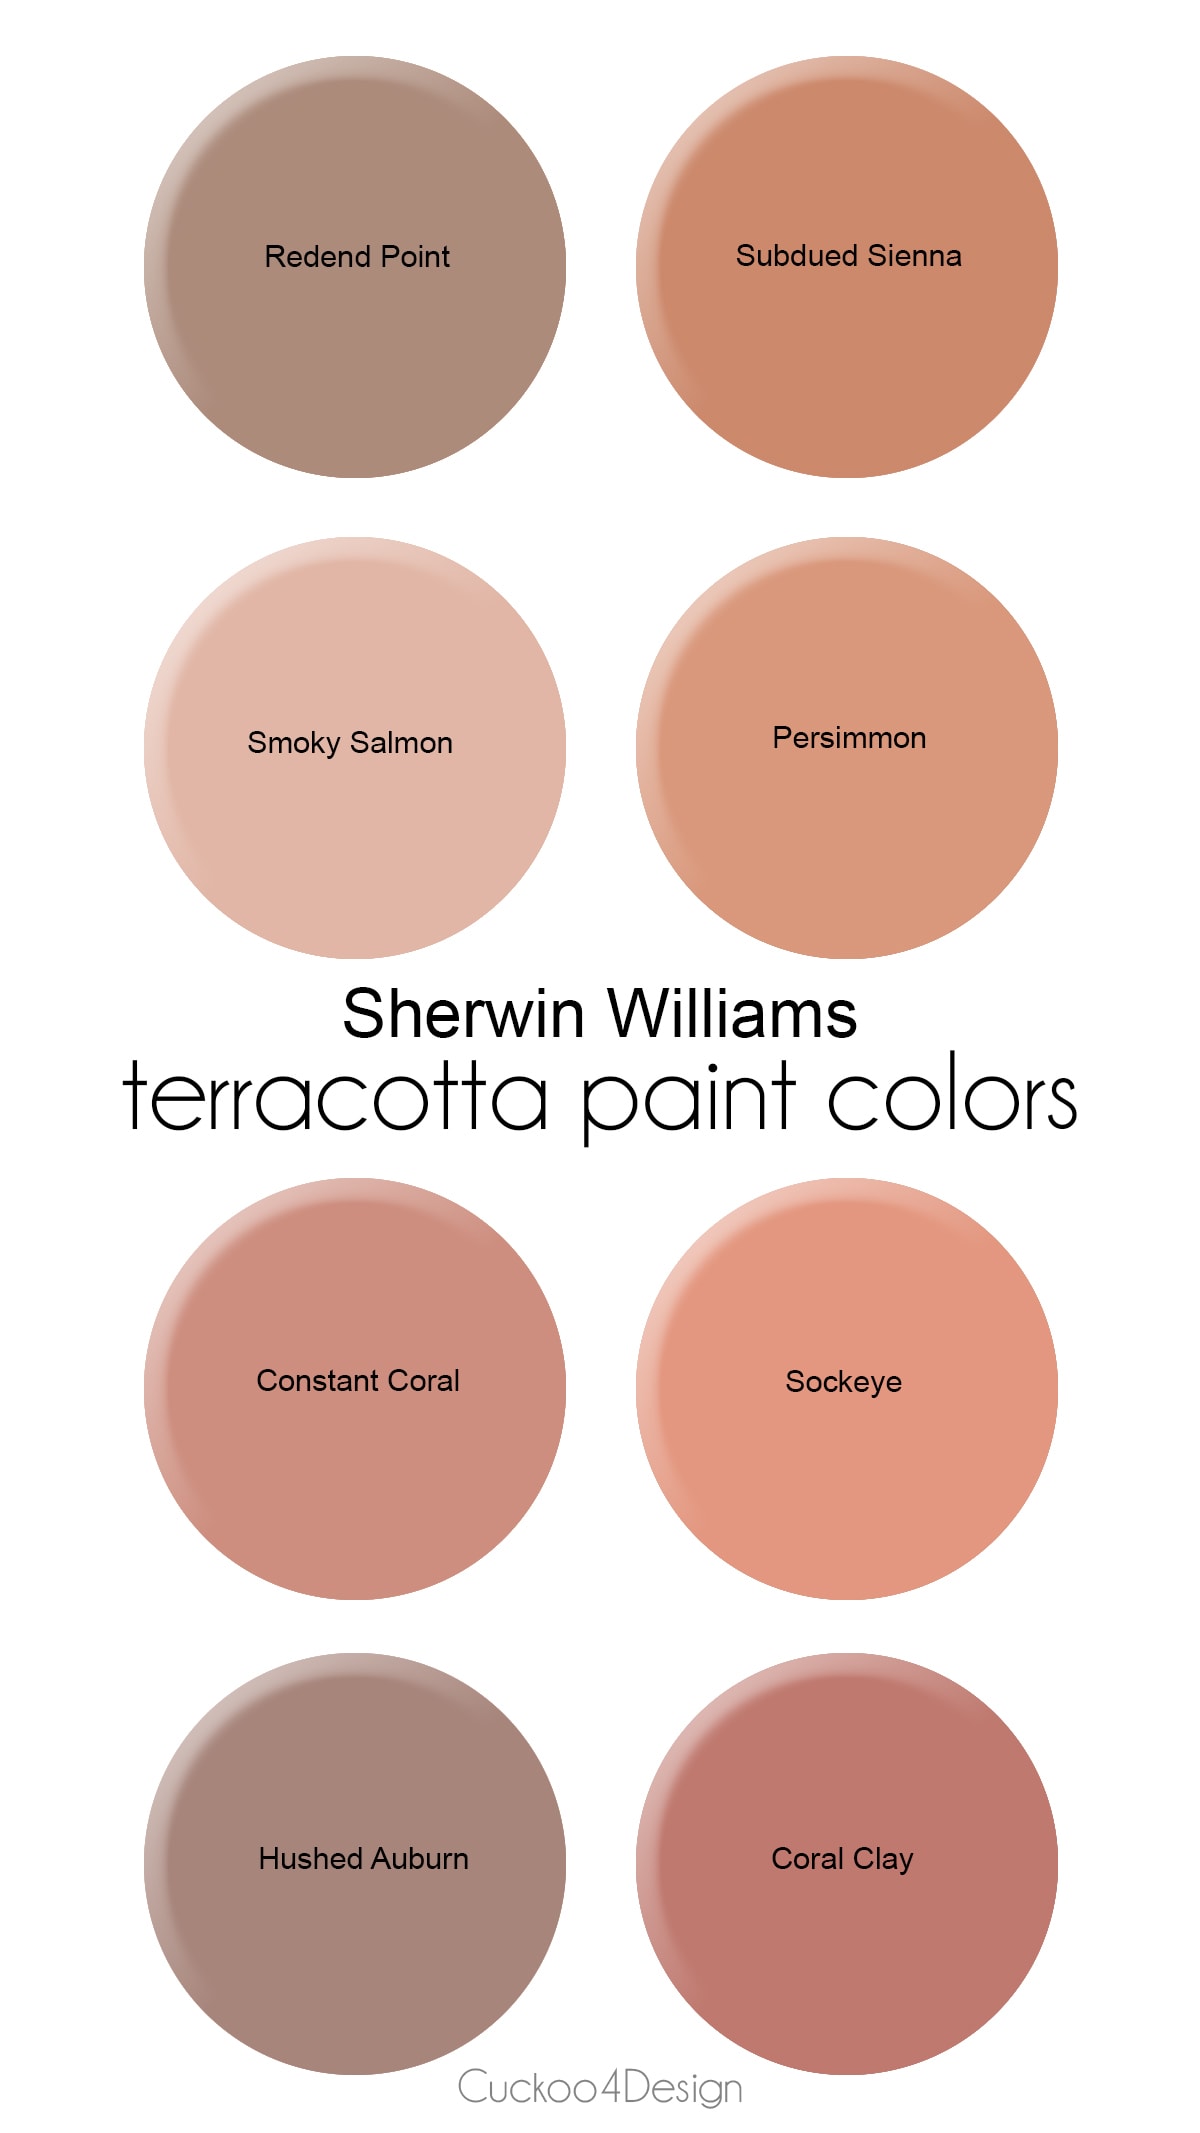 Sherwin Williams best terracotta paint colors